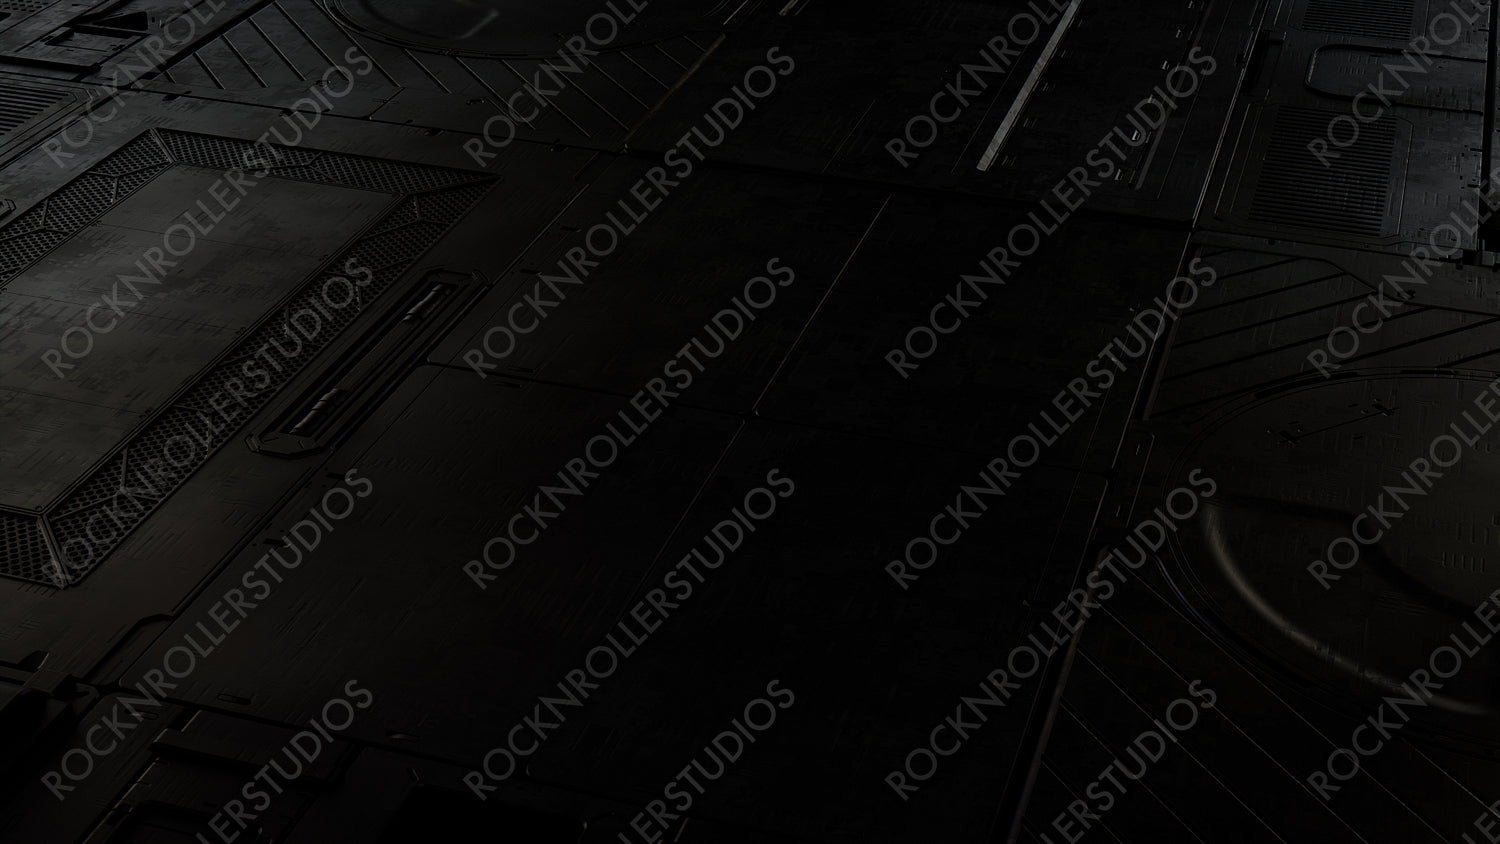 Black, Tech Wallpaper with Futuristic 3D Panels. Dark, Sci-Fi style. 3D Render.